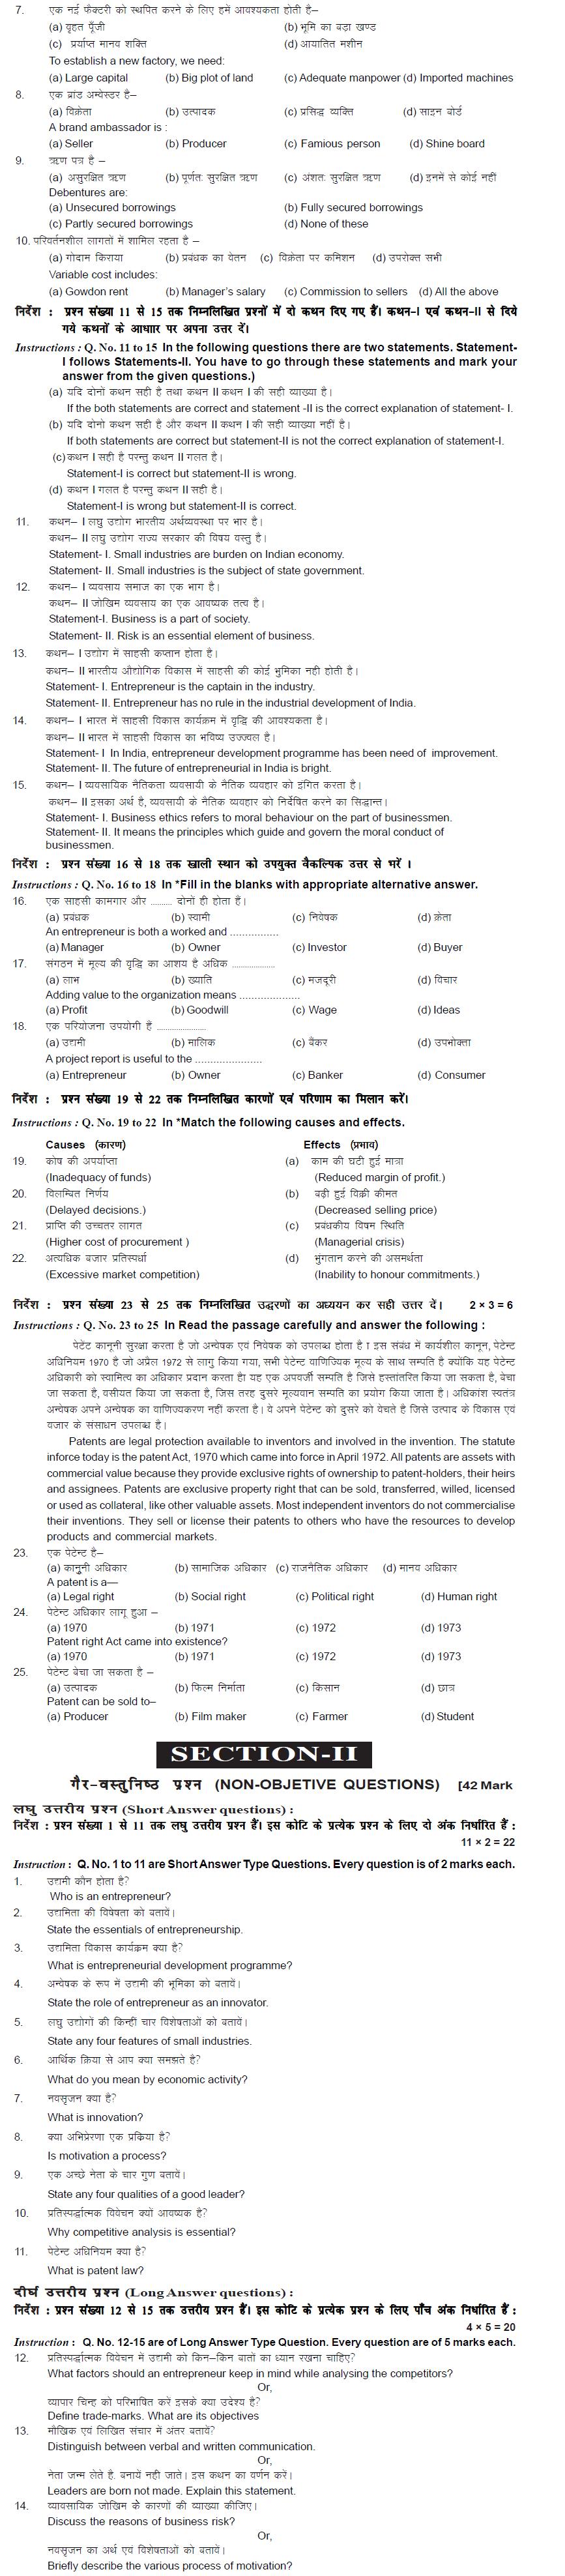 Bihar Board Class XI Commerce Model Question Papers - Enterprenureship